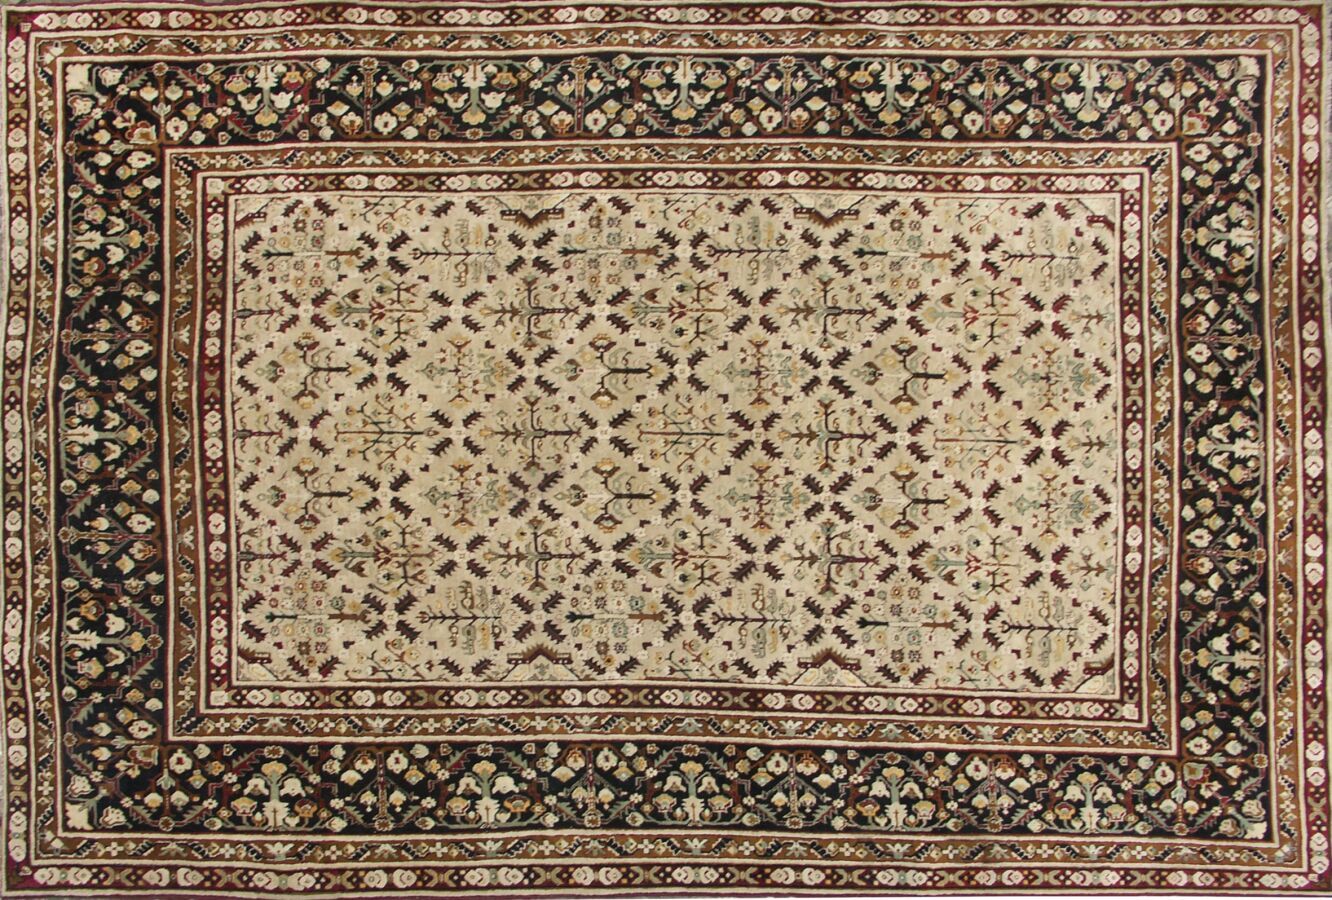 Null 杰出而重要的阿格拉，印度，19世纪末
棉质地面上的高品质丝质羊毛绒布 
象牙领域装饰有十字纹，周围有棒状物，并镶嵌有几何形状的花草图案 
五个边框，其&hellip;